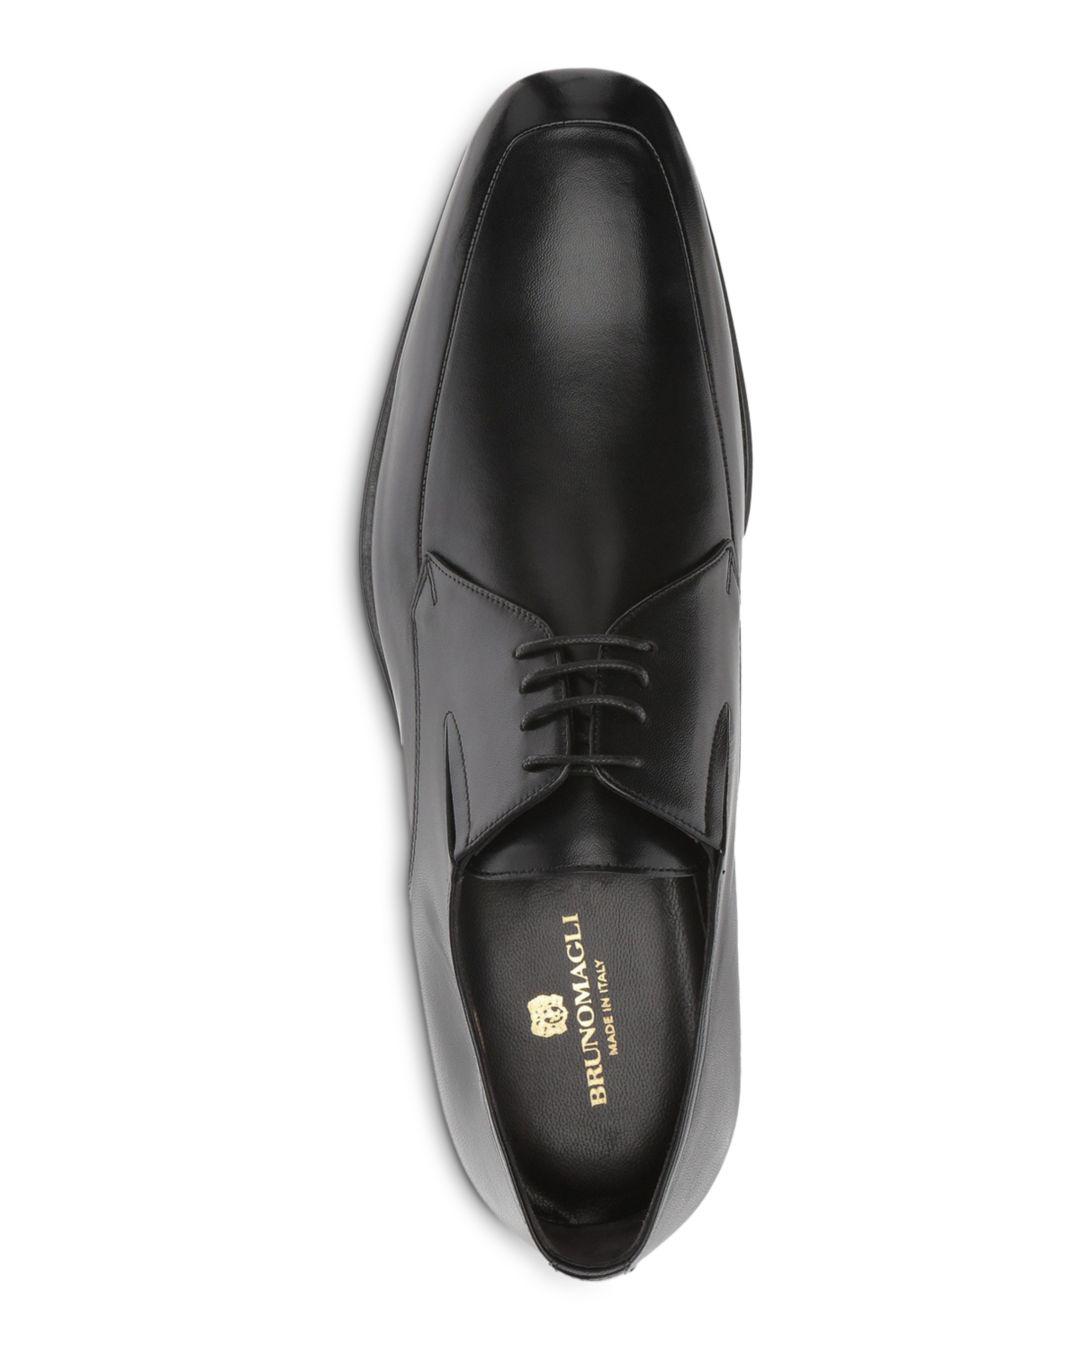 Bruno Magli Men's Rich Dress Shoes in Black for Men - Lyst